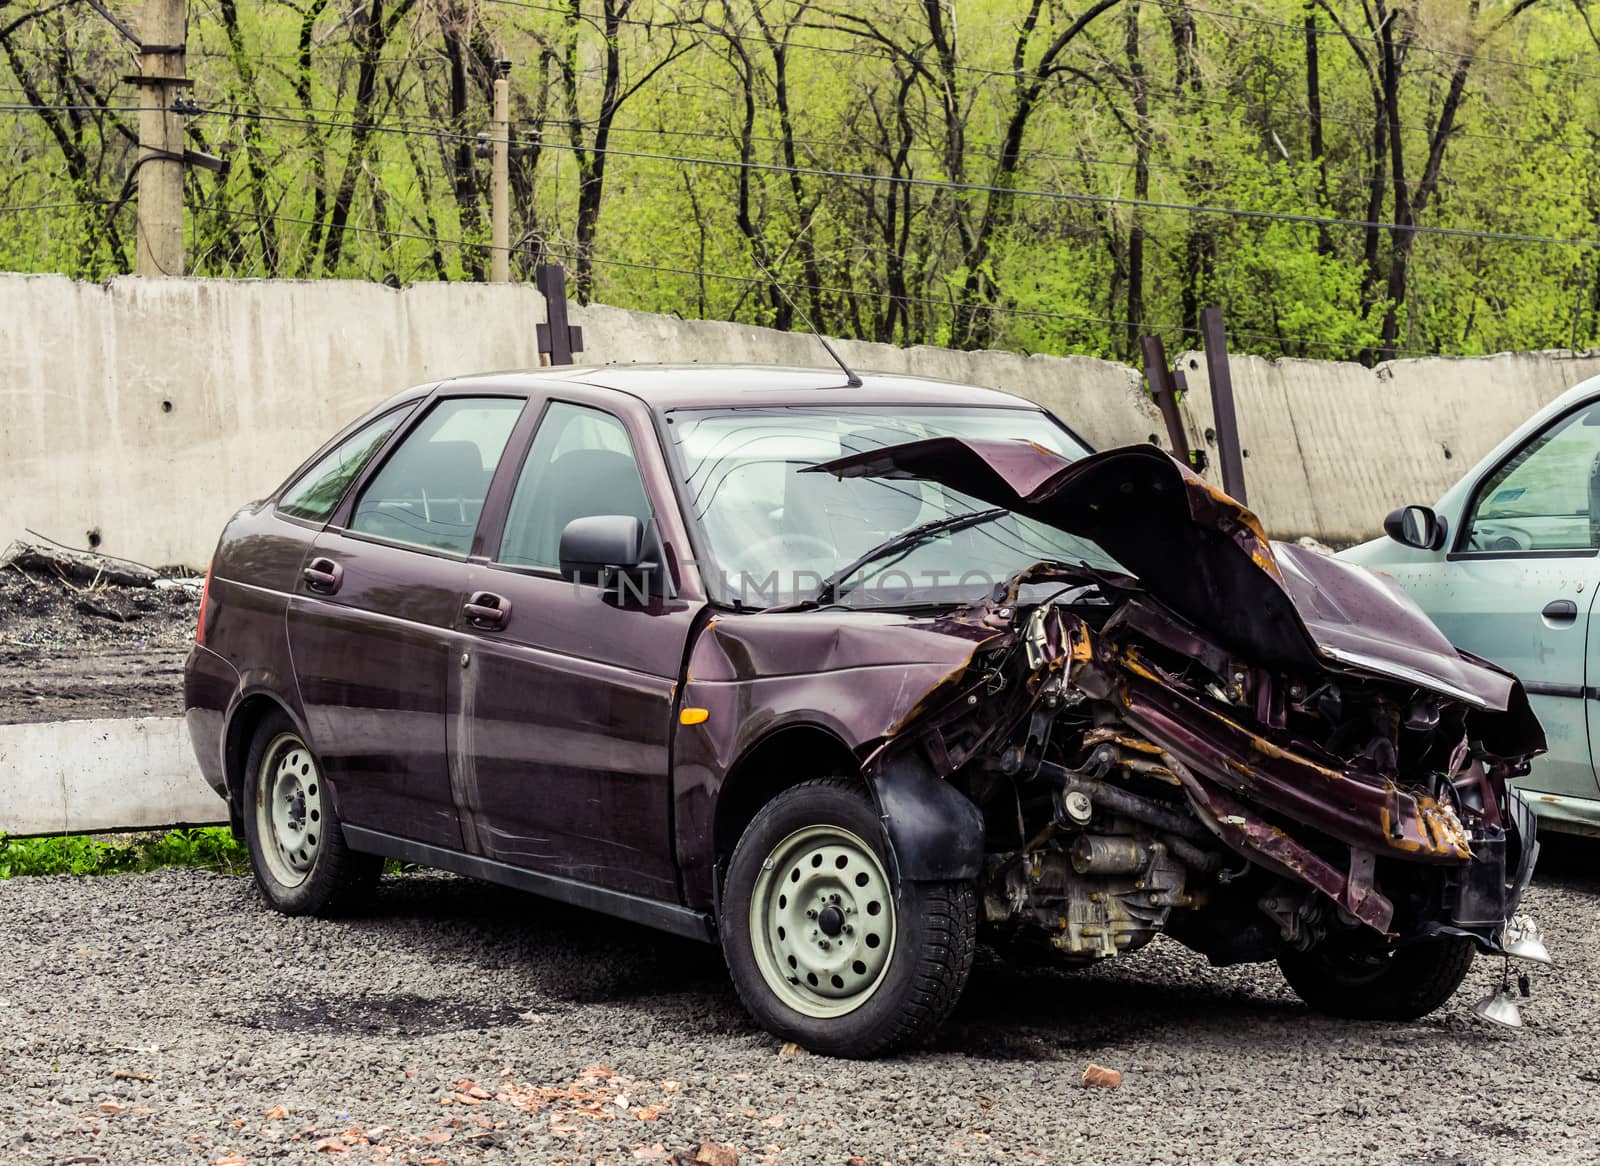 A car in a car wreckers yard after a recent crash